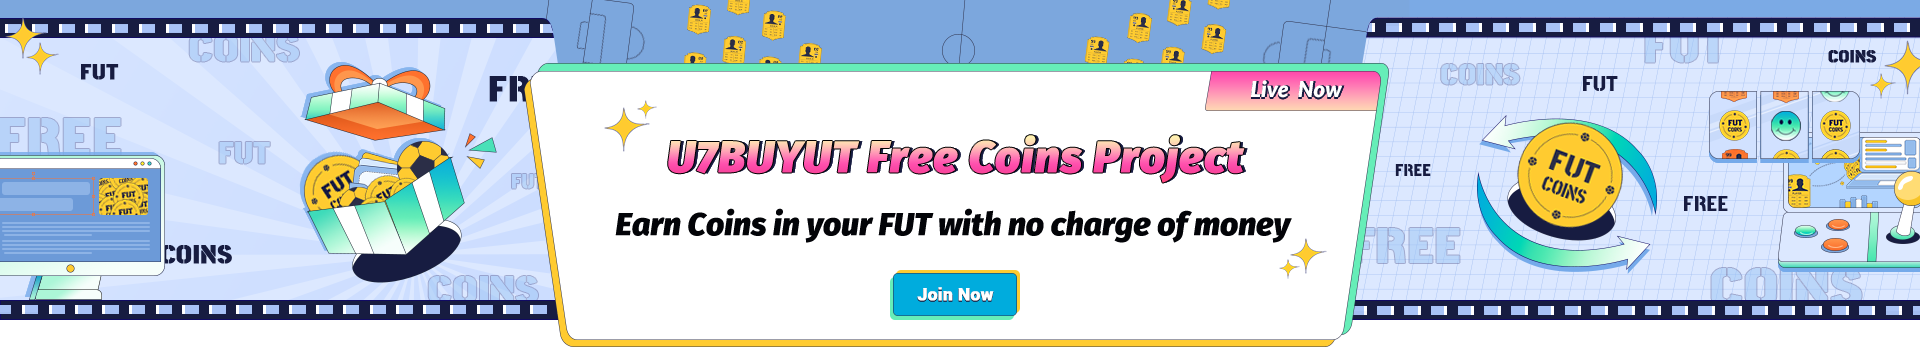 Free FIFA Coins